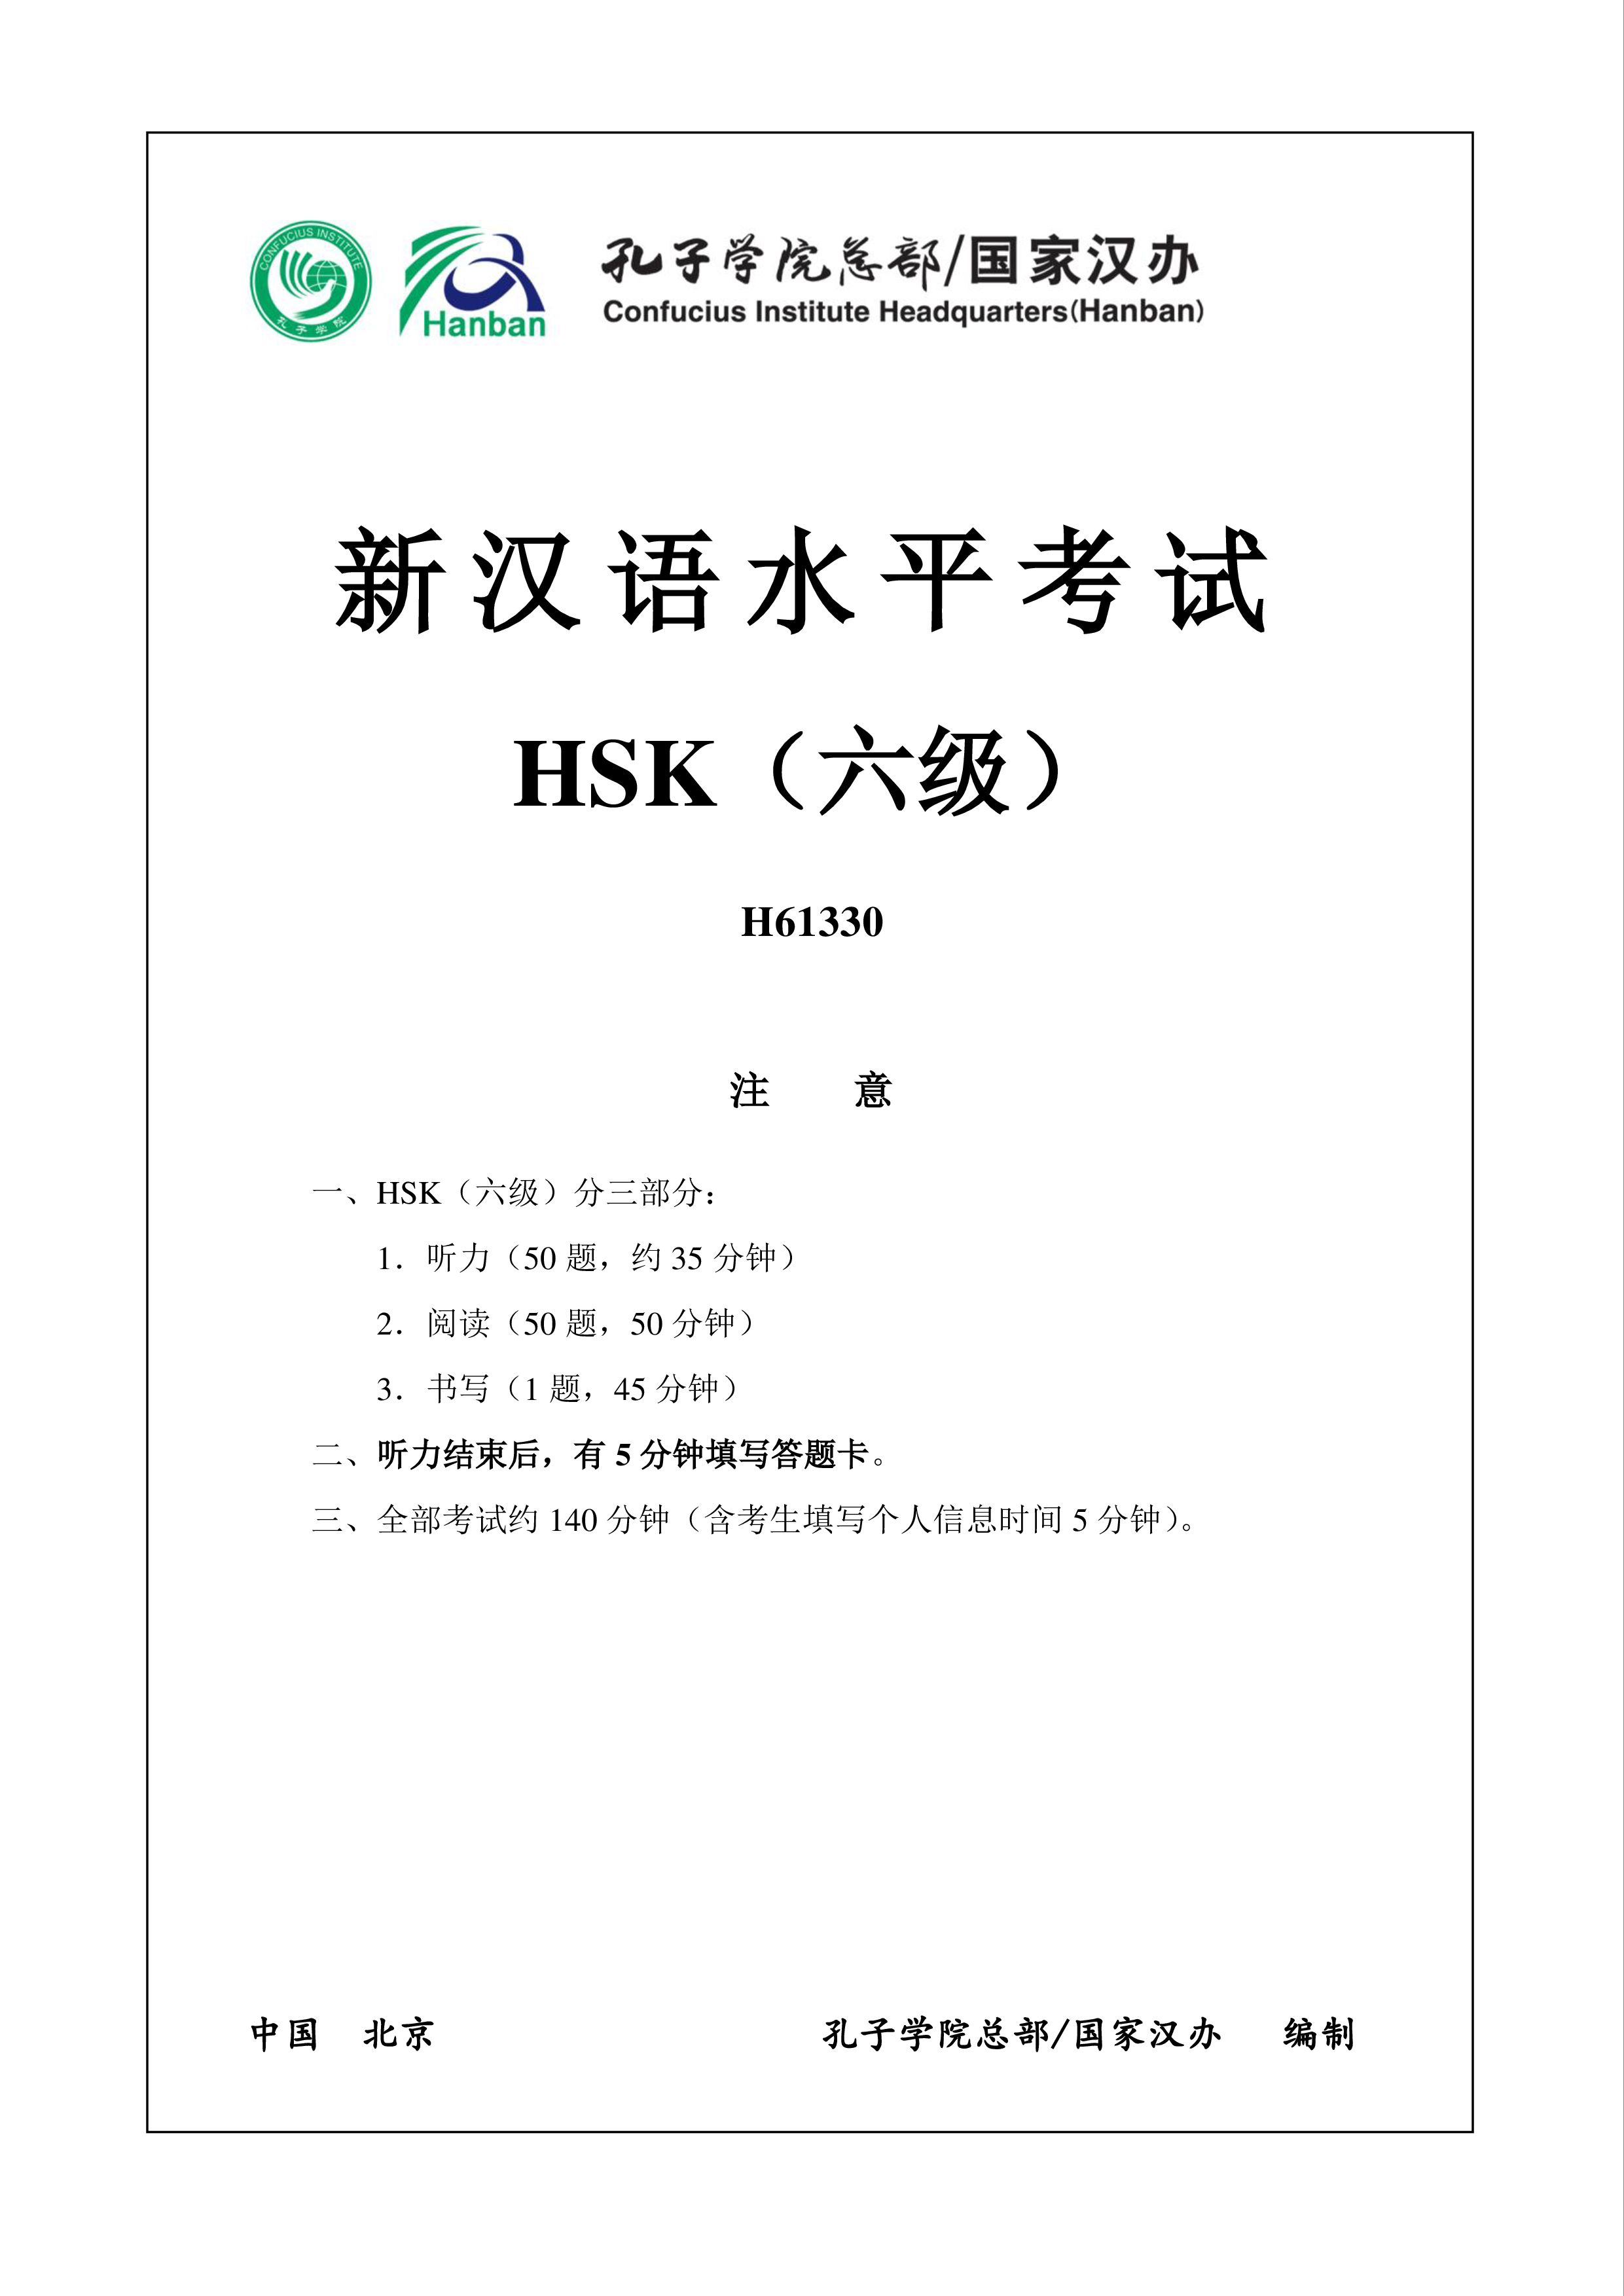 hsk6 chinese exam incl audio, answers # h61330 plantilla imagen principal